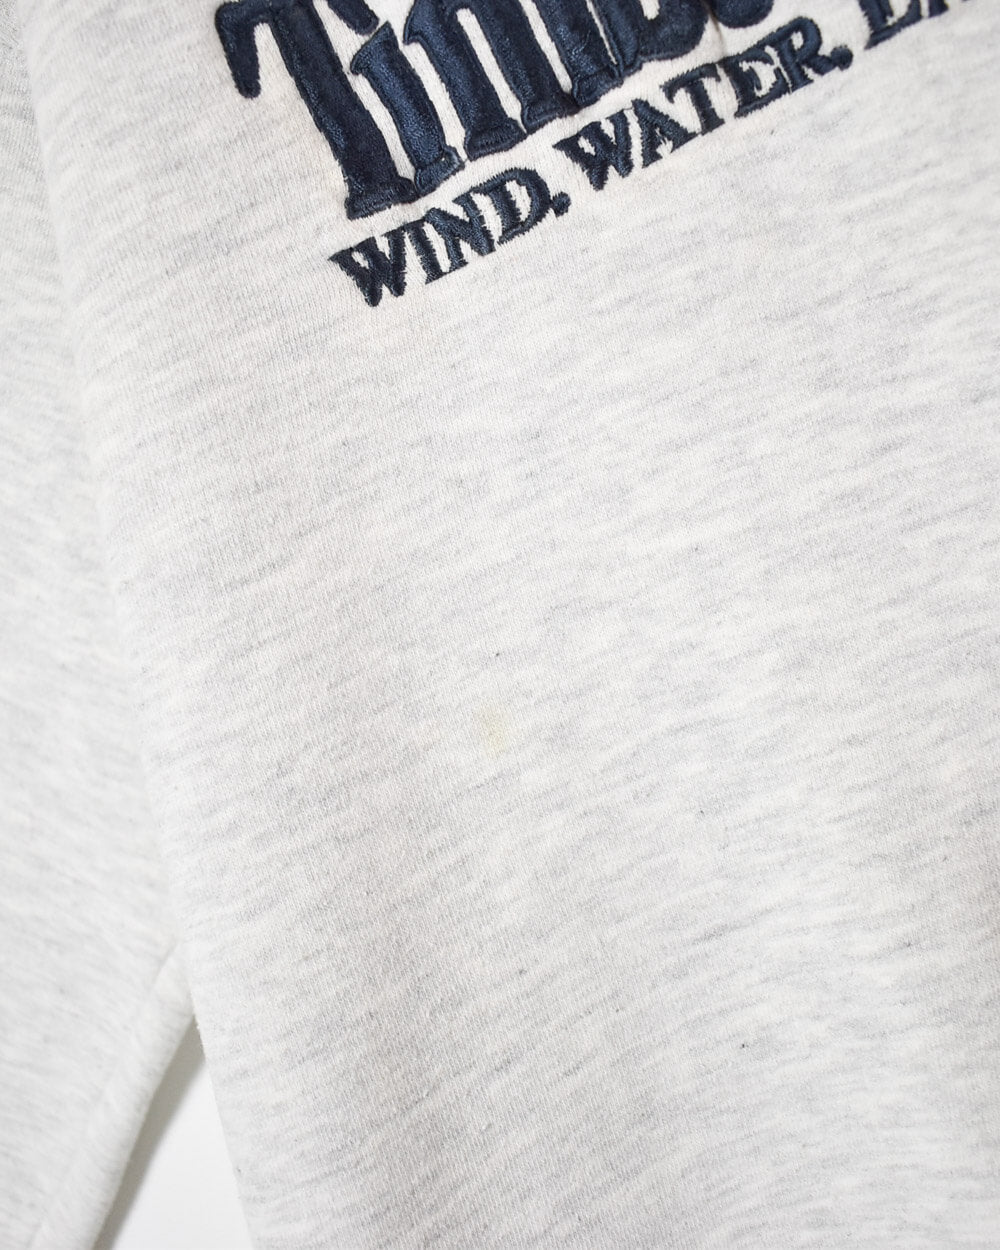 Stone Timberland Weathergear Wind Water Earth and Sky Sweatshirt - Small